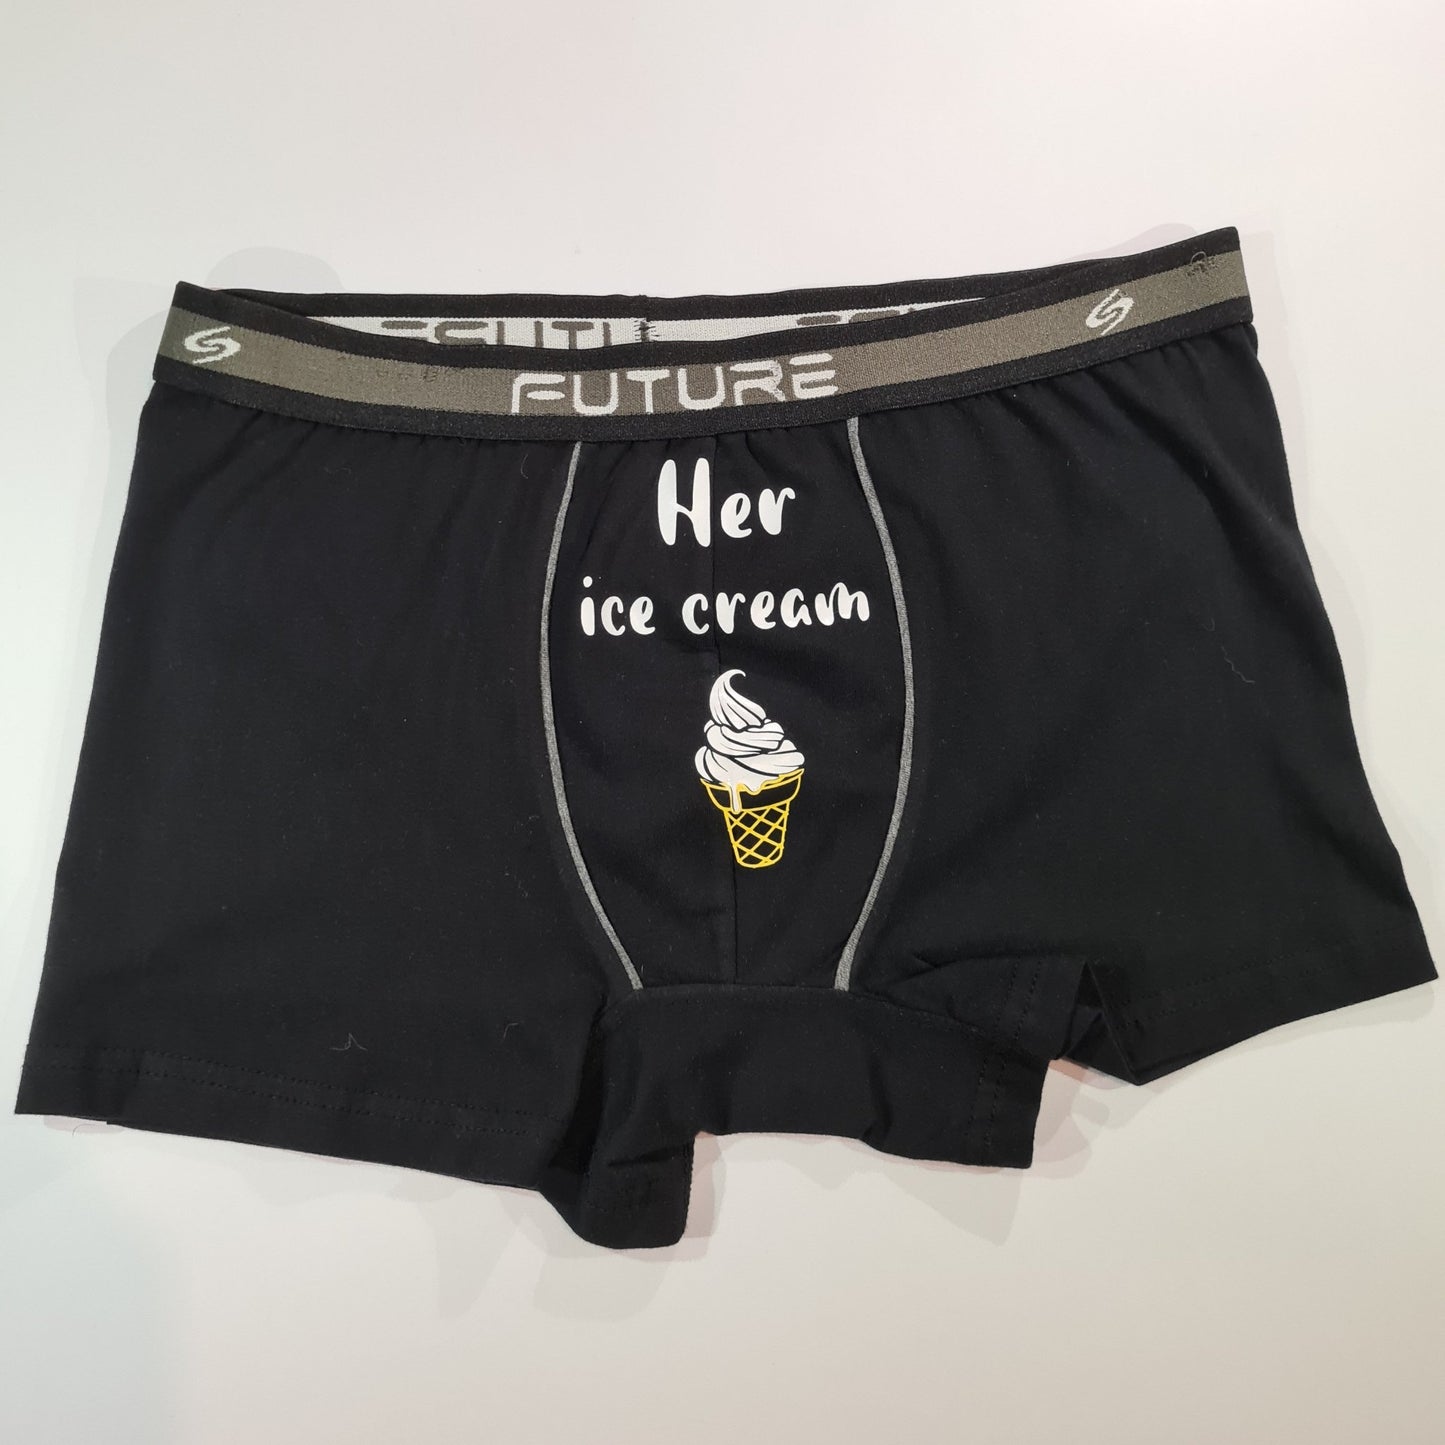 Men underwear - Ice Cream - Etba3lly